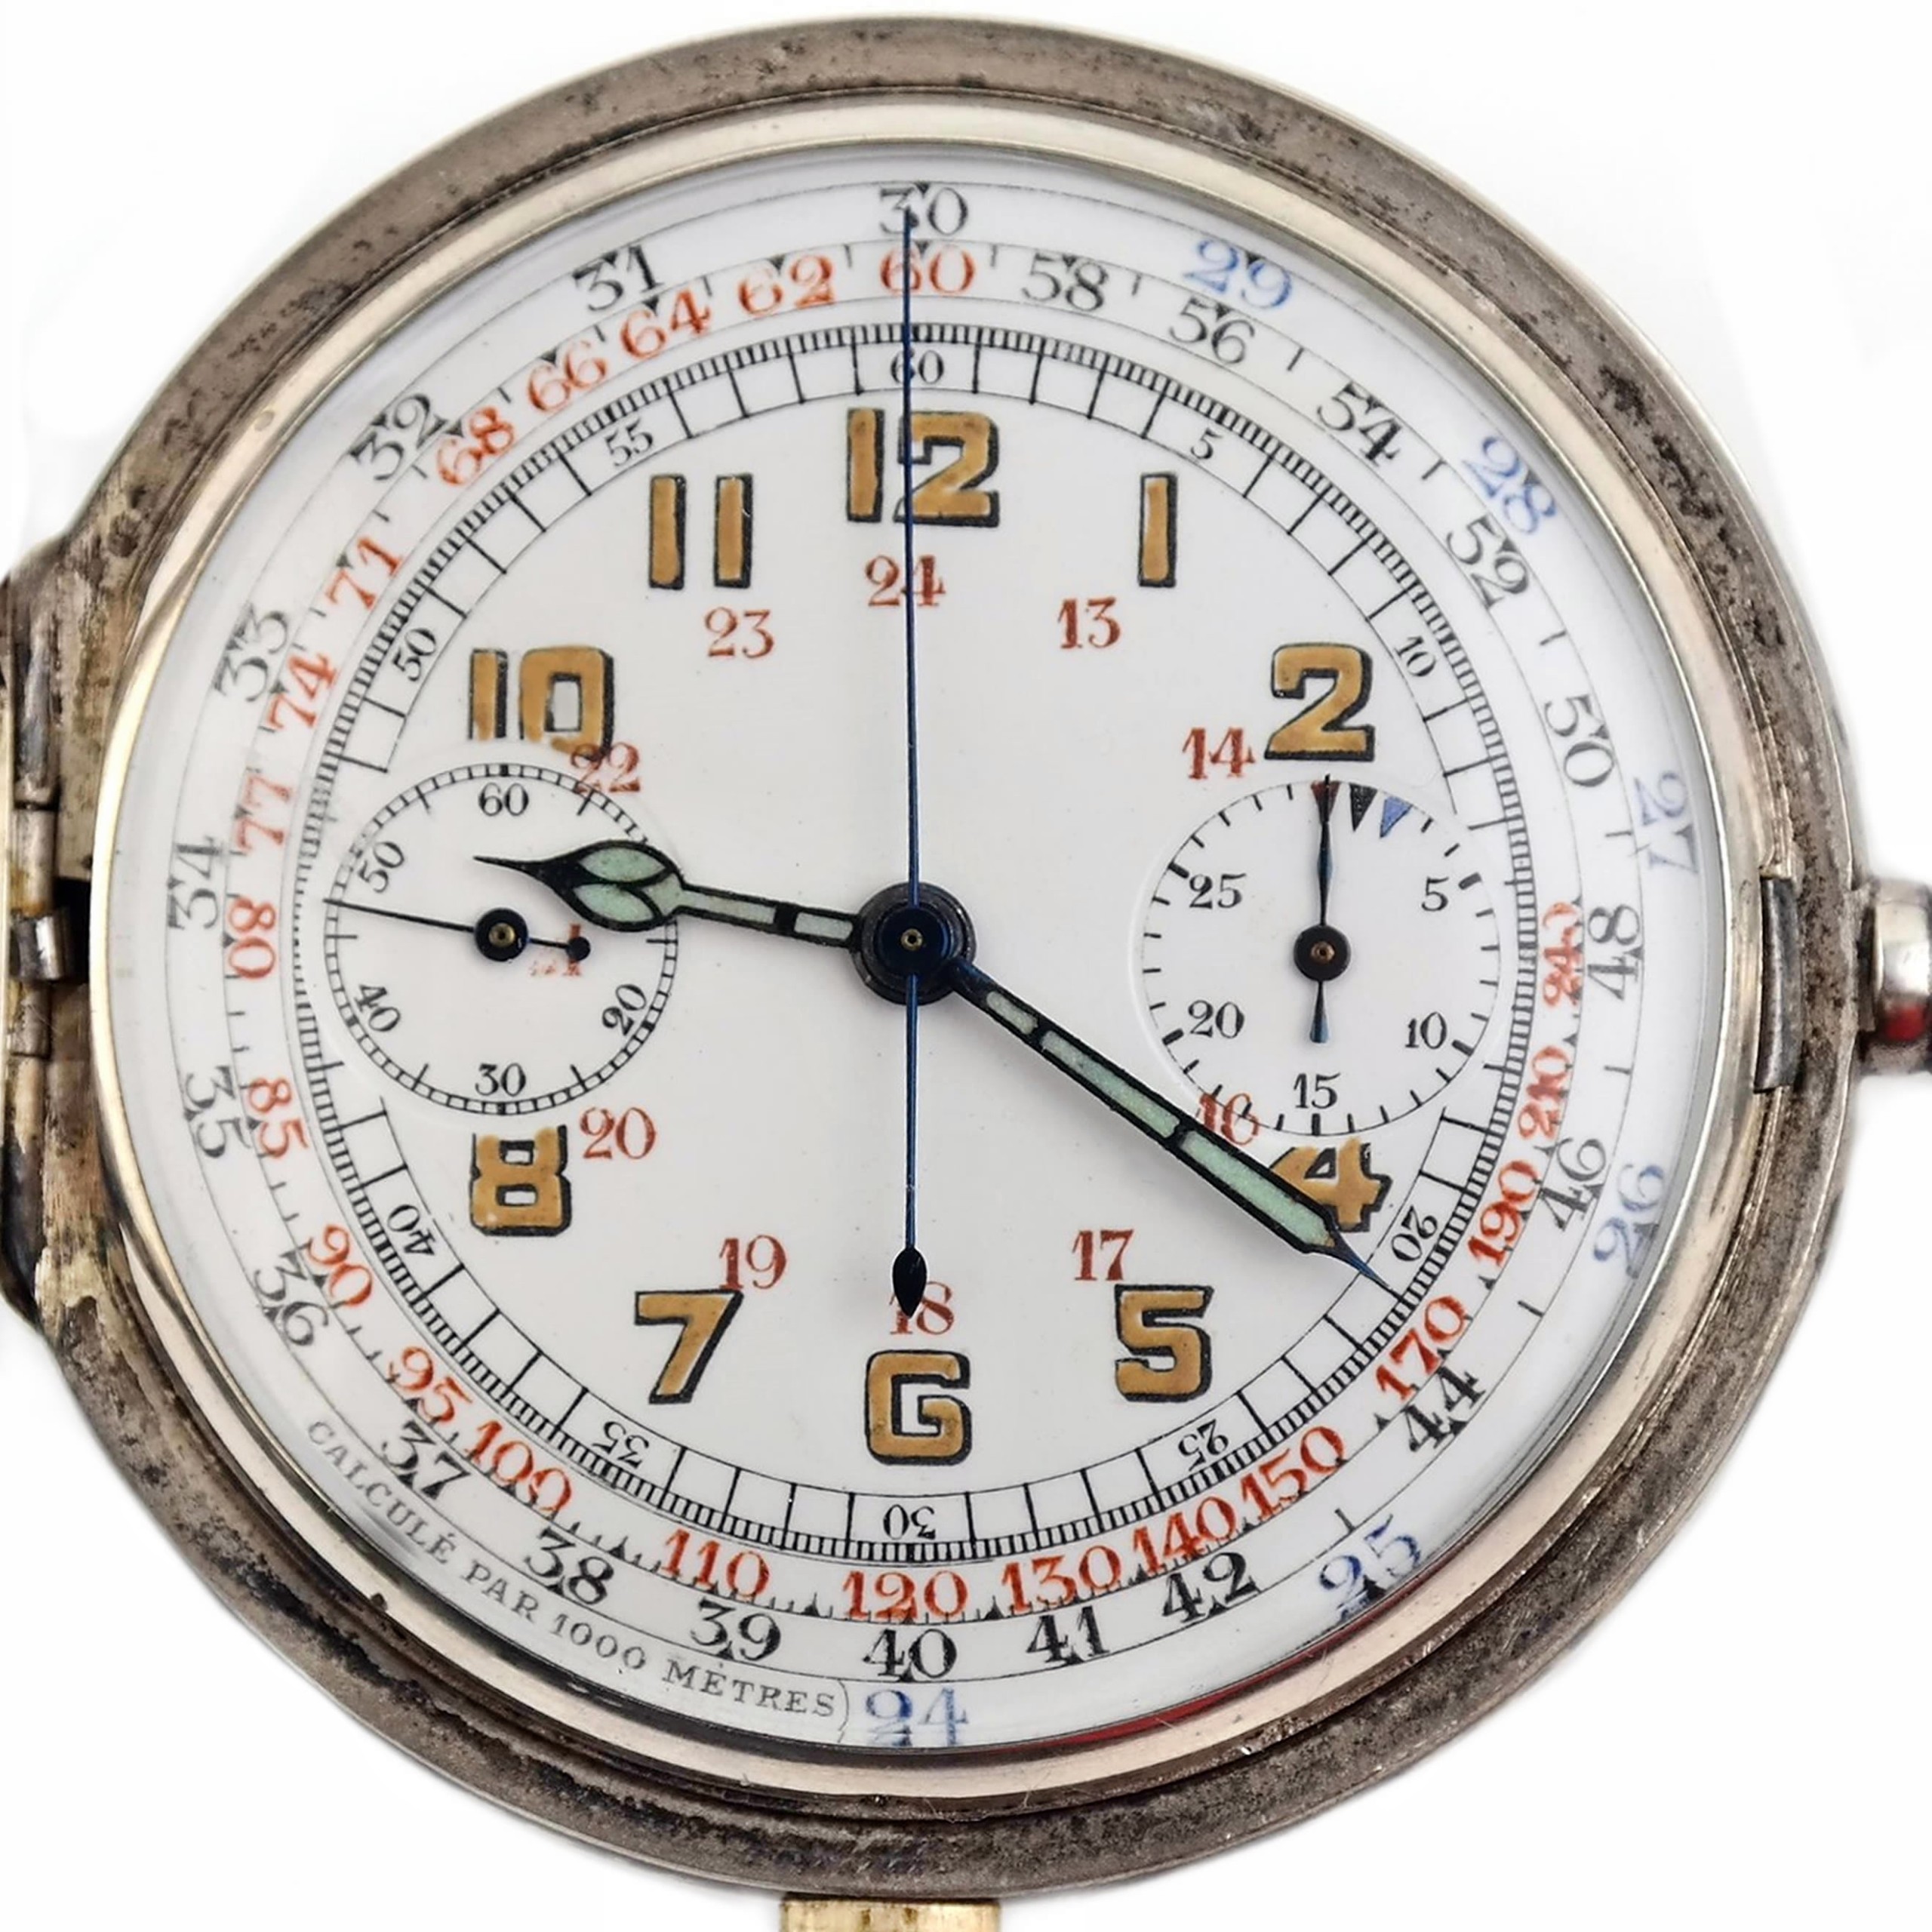 Single Pusher Column Wheel Chronograph Vintage Silver Pocket Watch